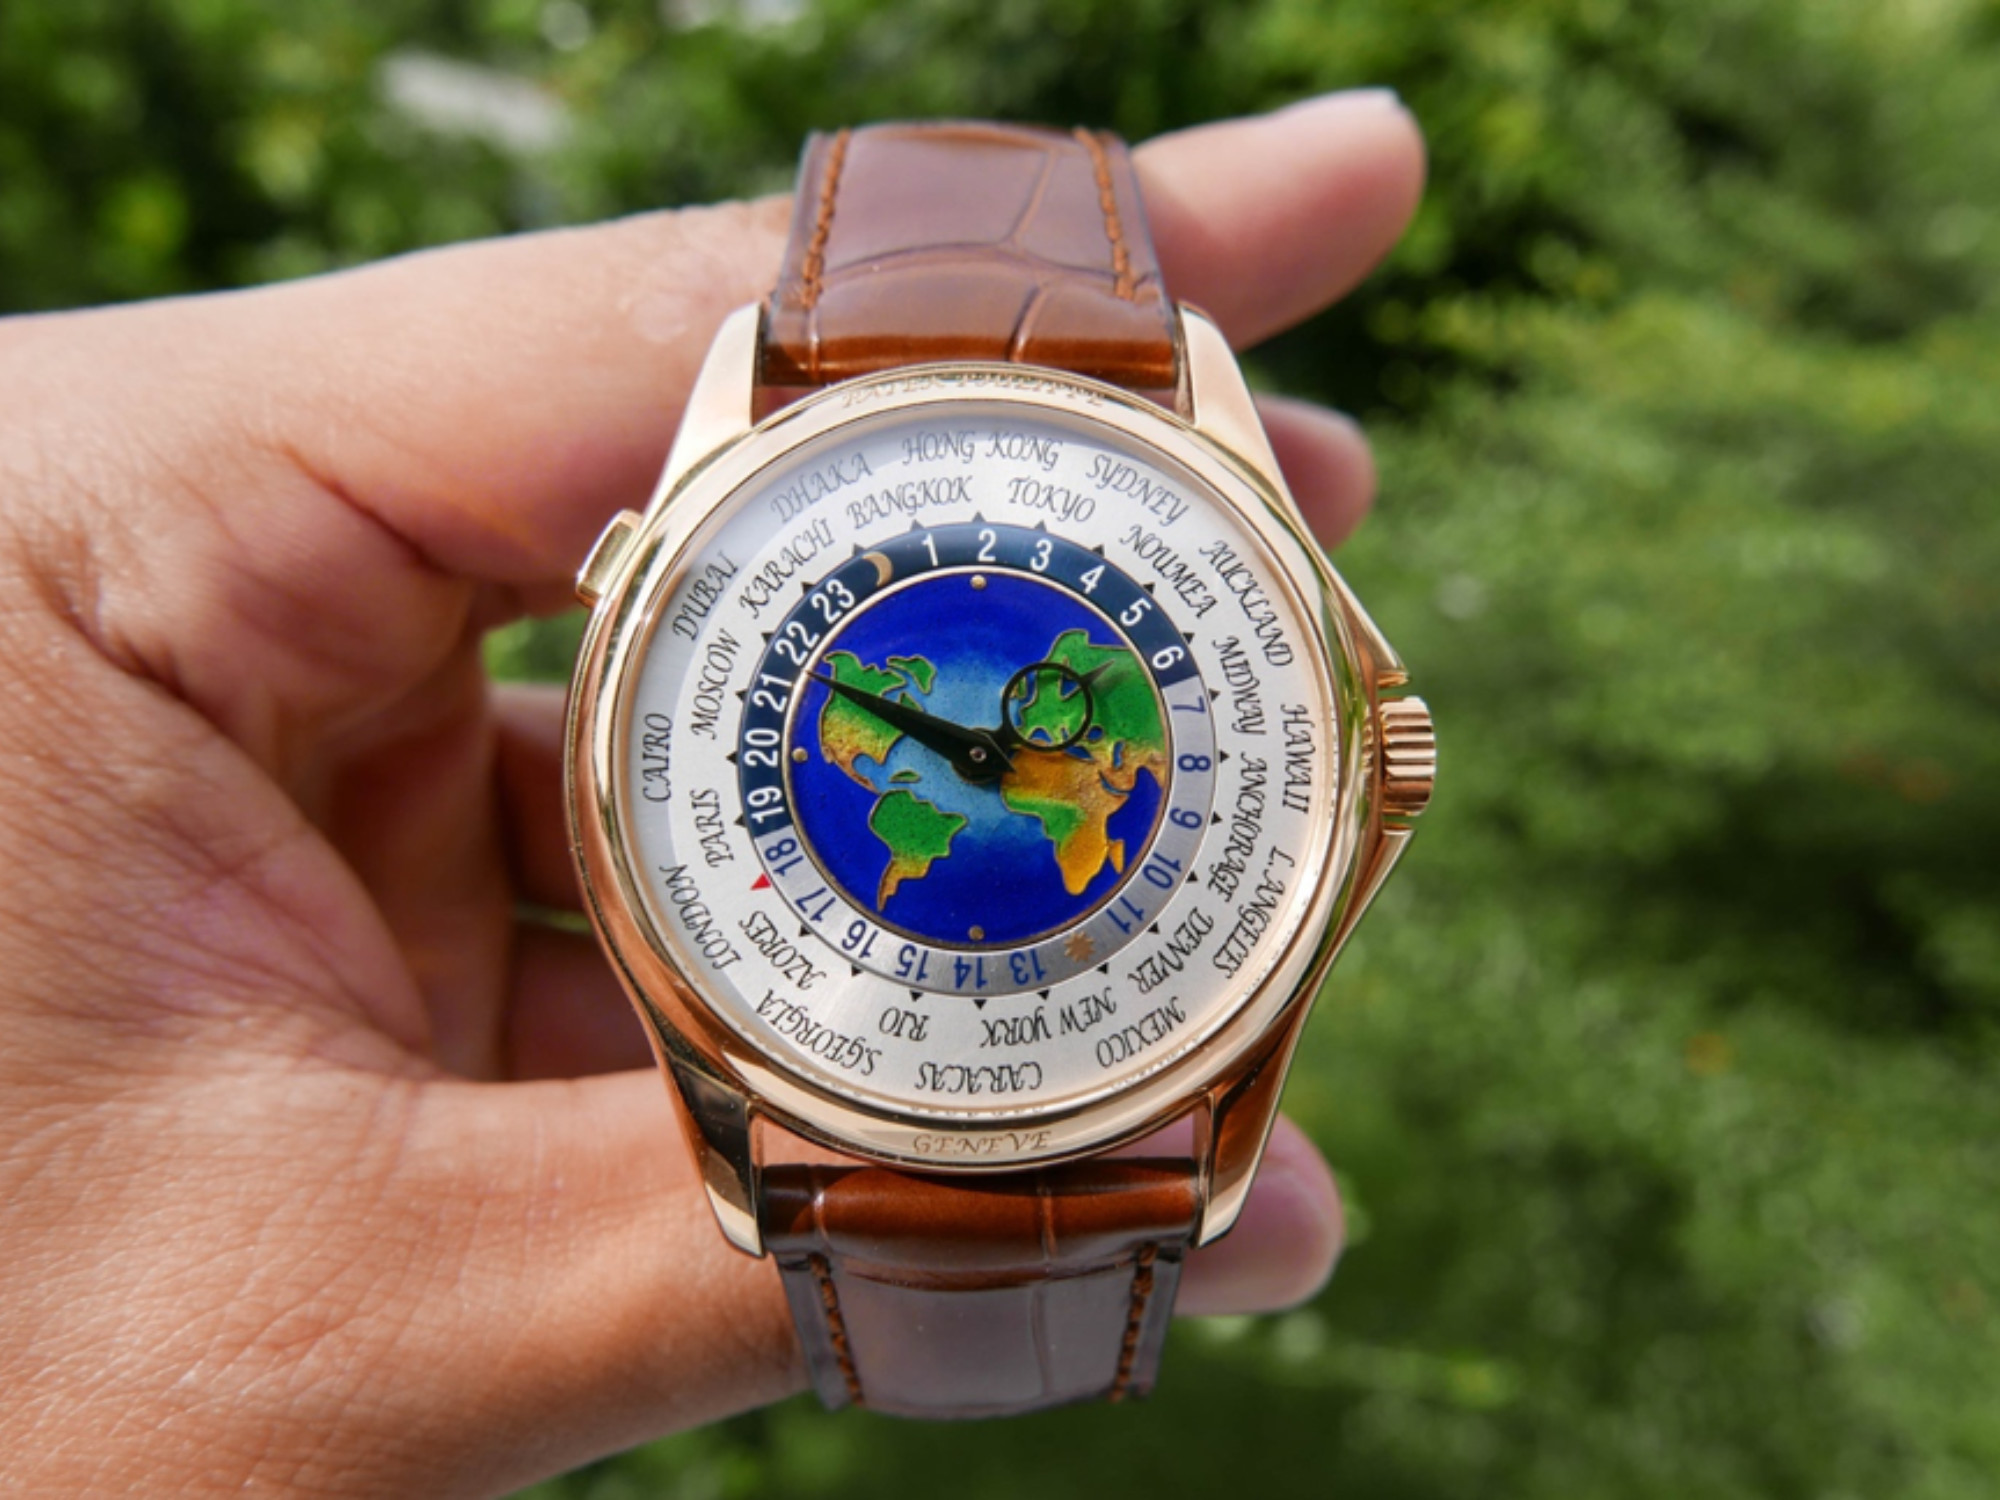 Patek Philippe World Time Watch Ref. 5230R